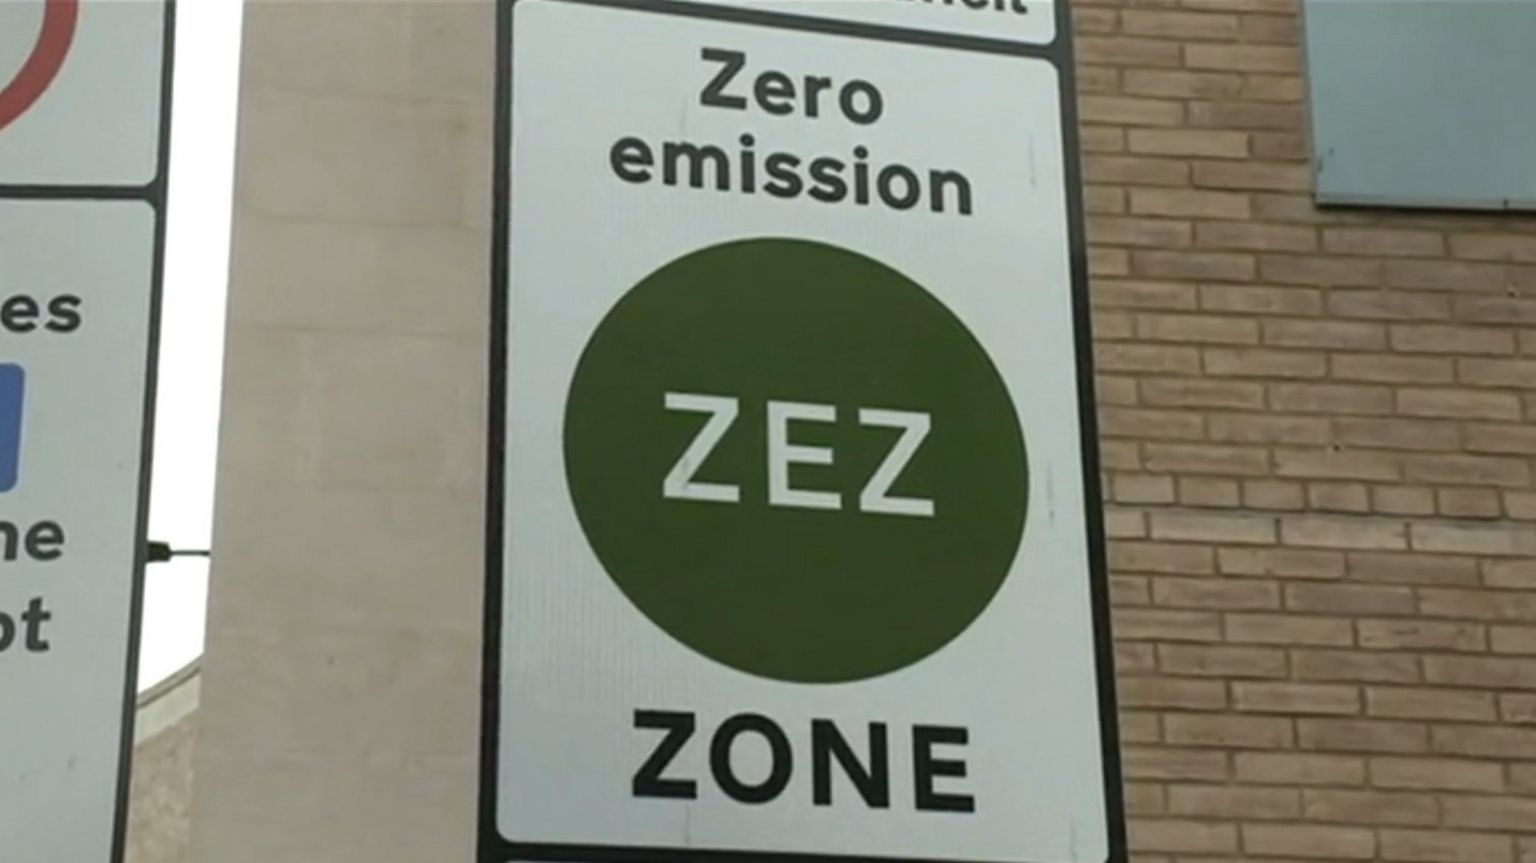 Zero emission zone in Oxford